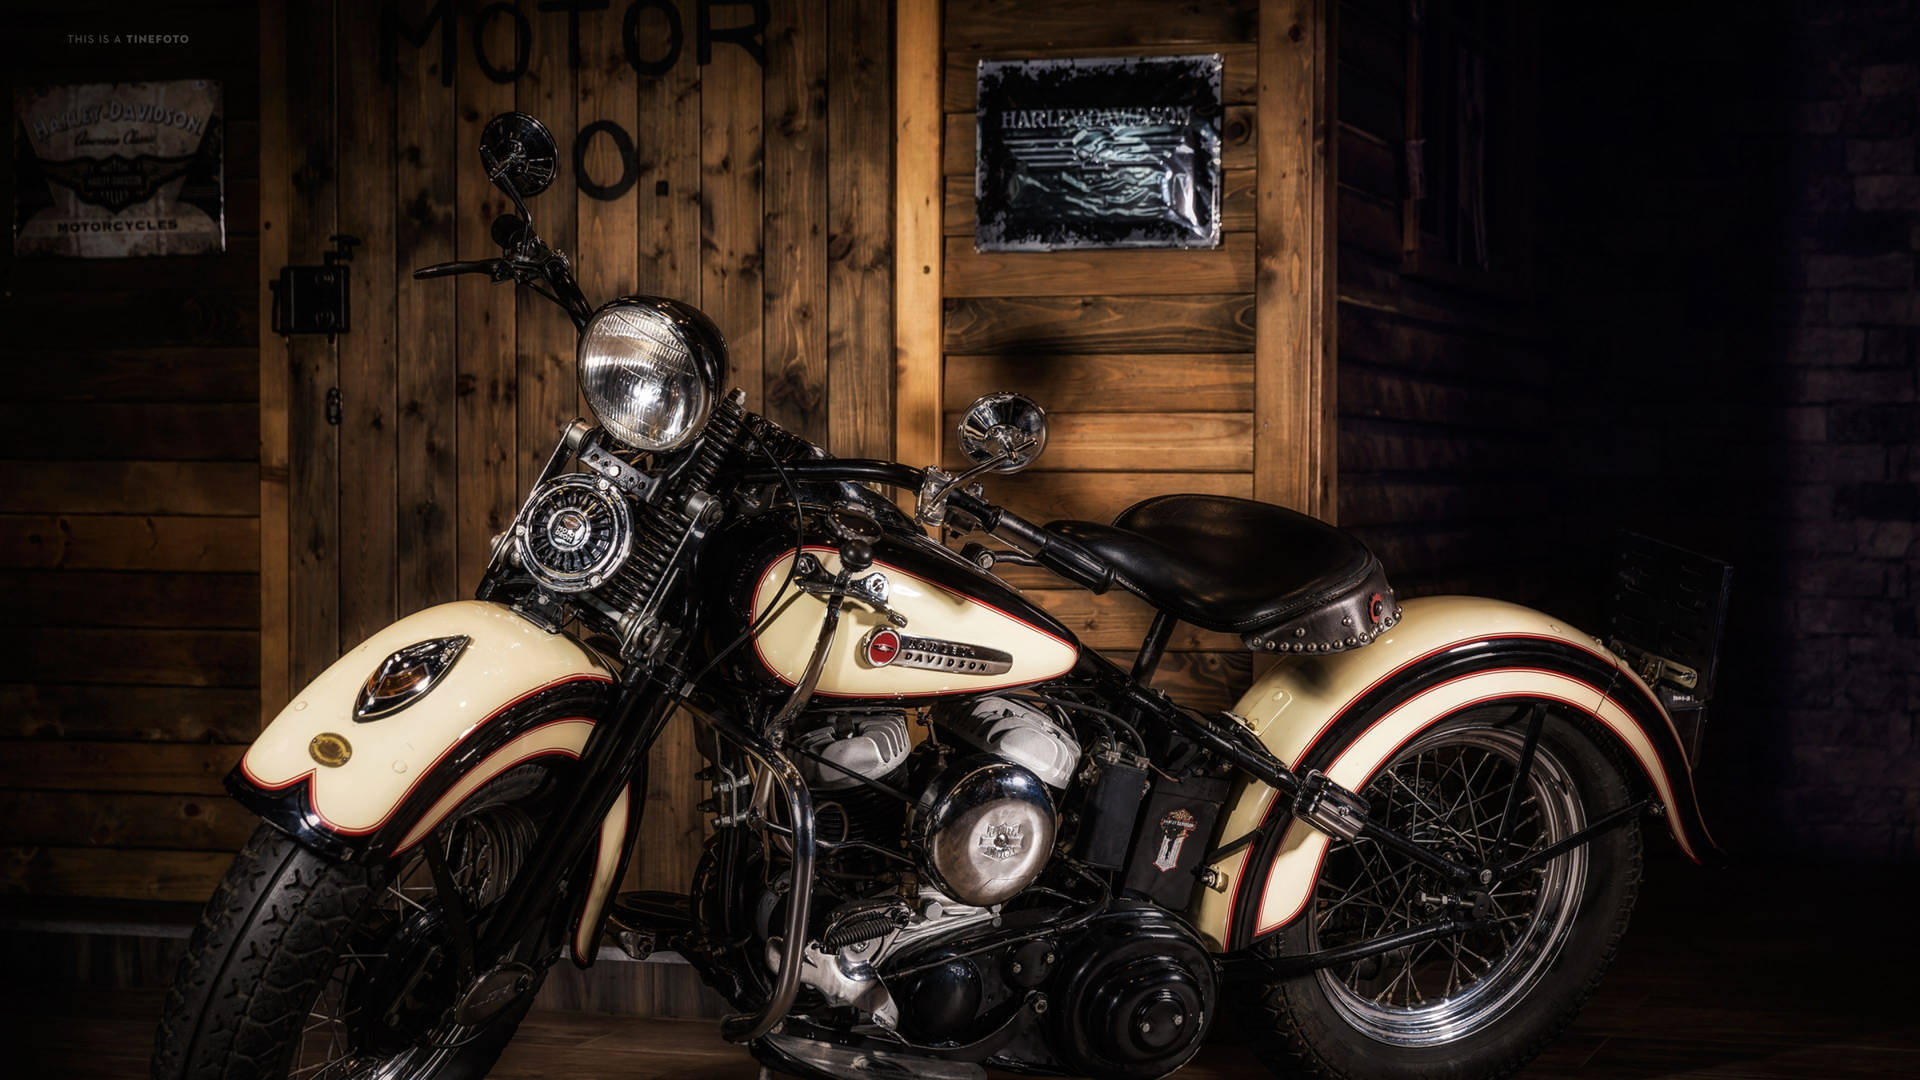 Harley Davidson 3840X2160 Wallpaper and Background Image